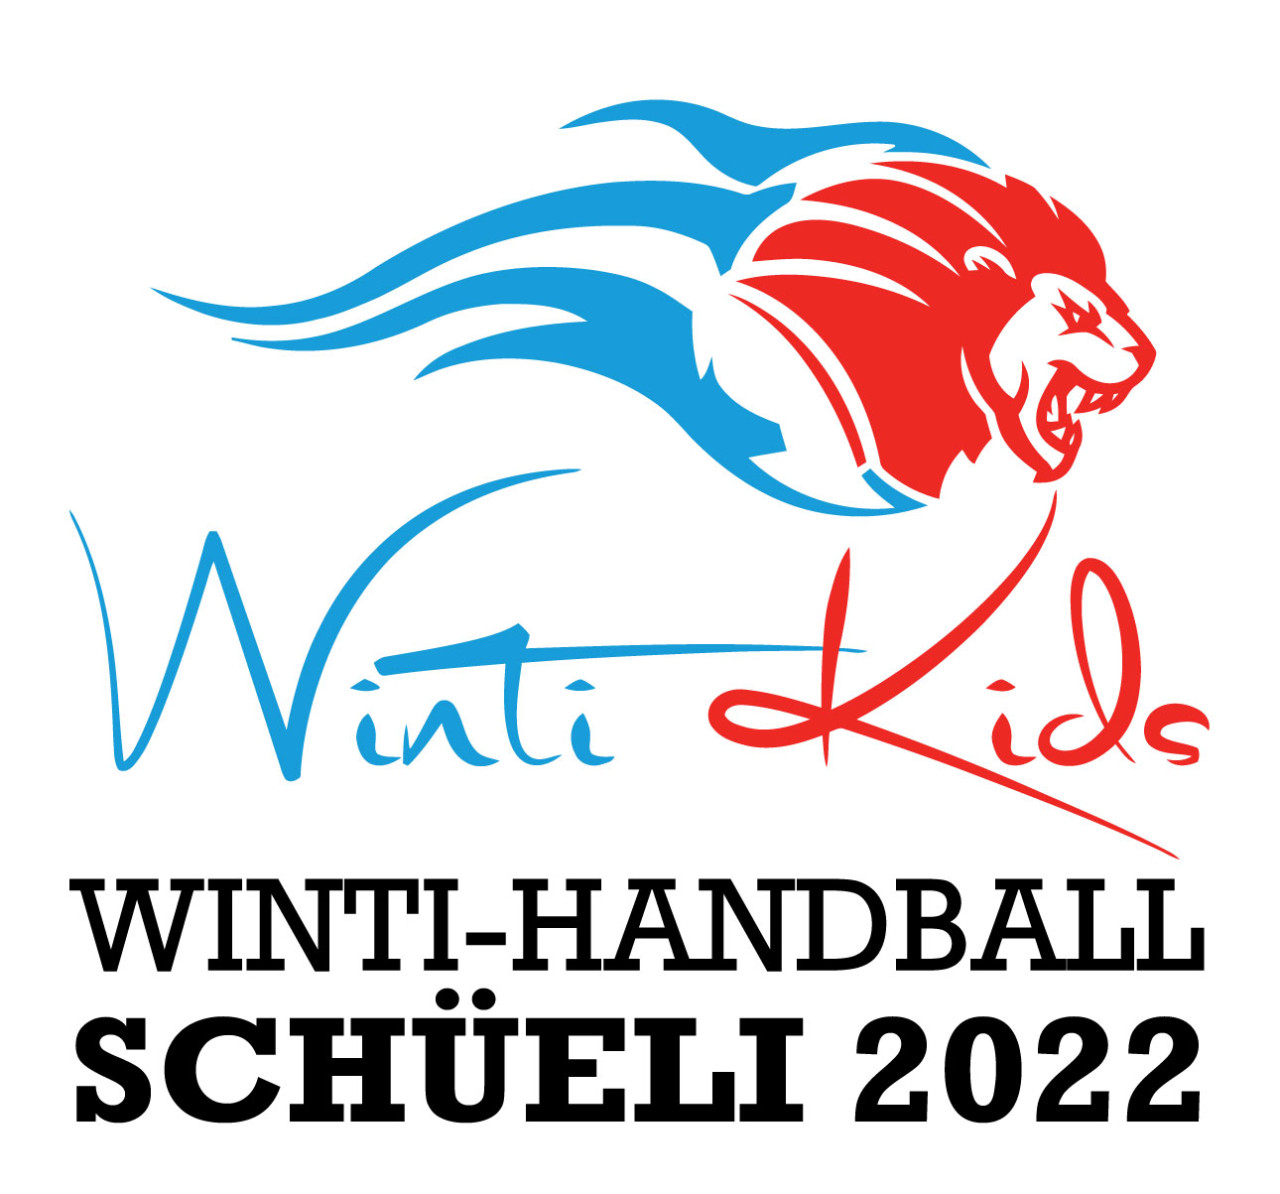 Winti-Handball SchÃ¼eli 2022